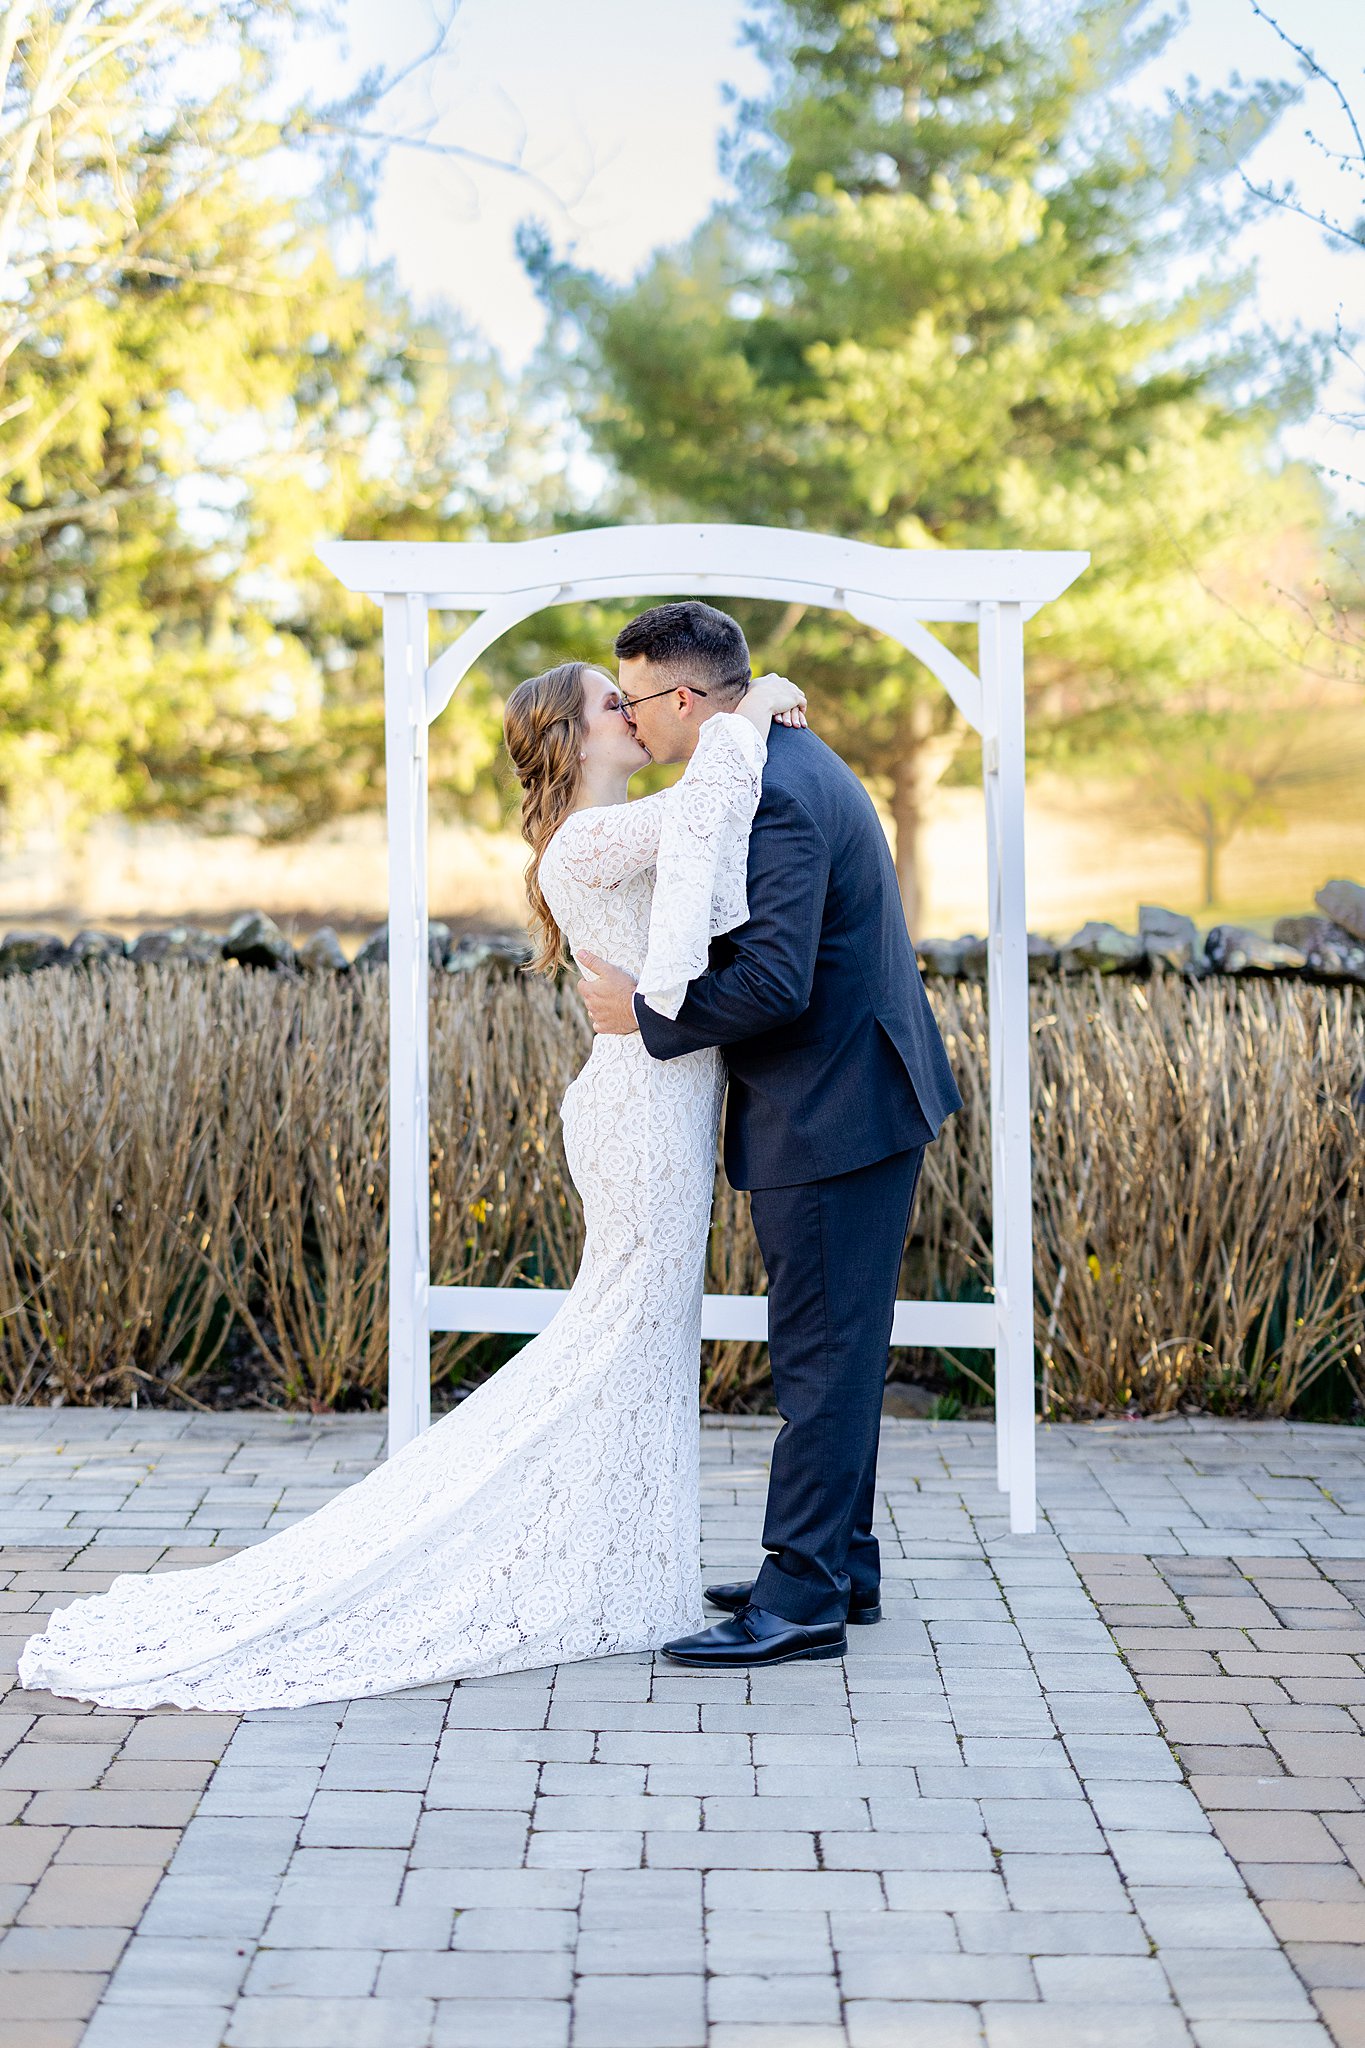 Newlyweds kiss under a pergola arch on a stone patio inside a garden virginia elopement